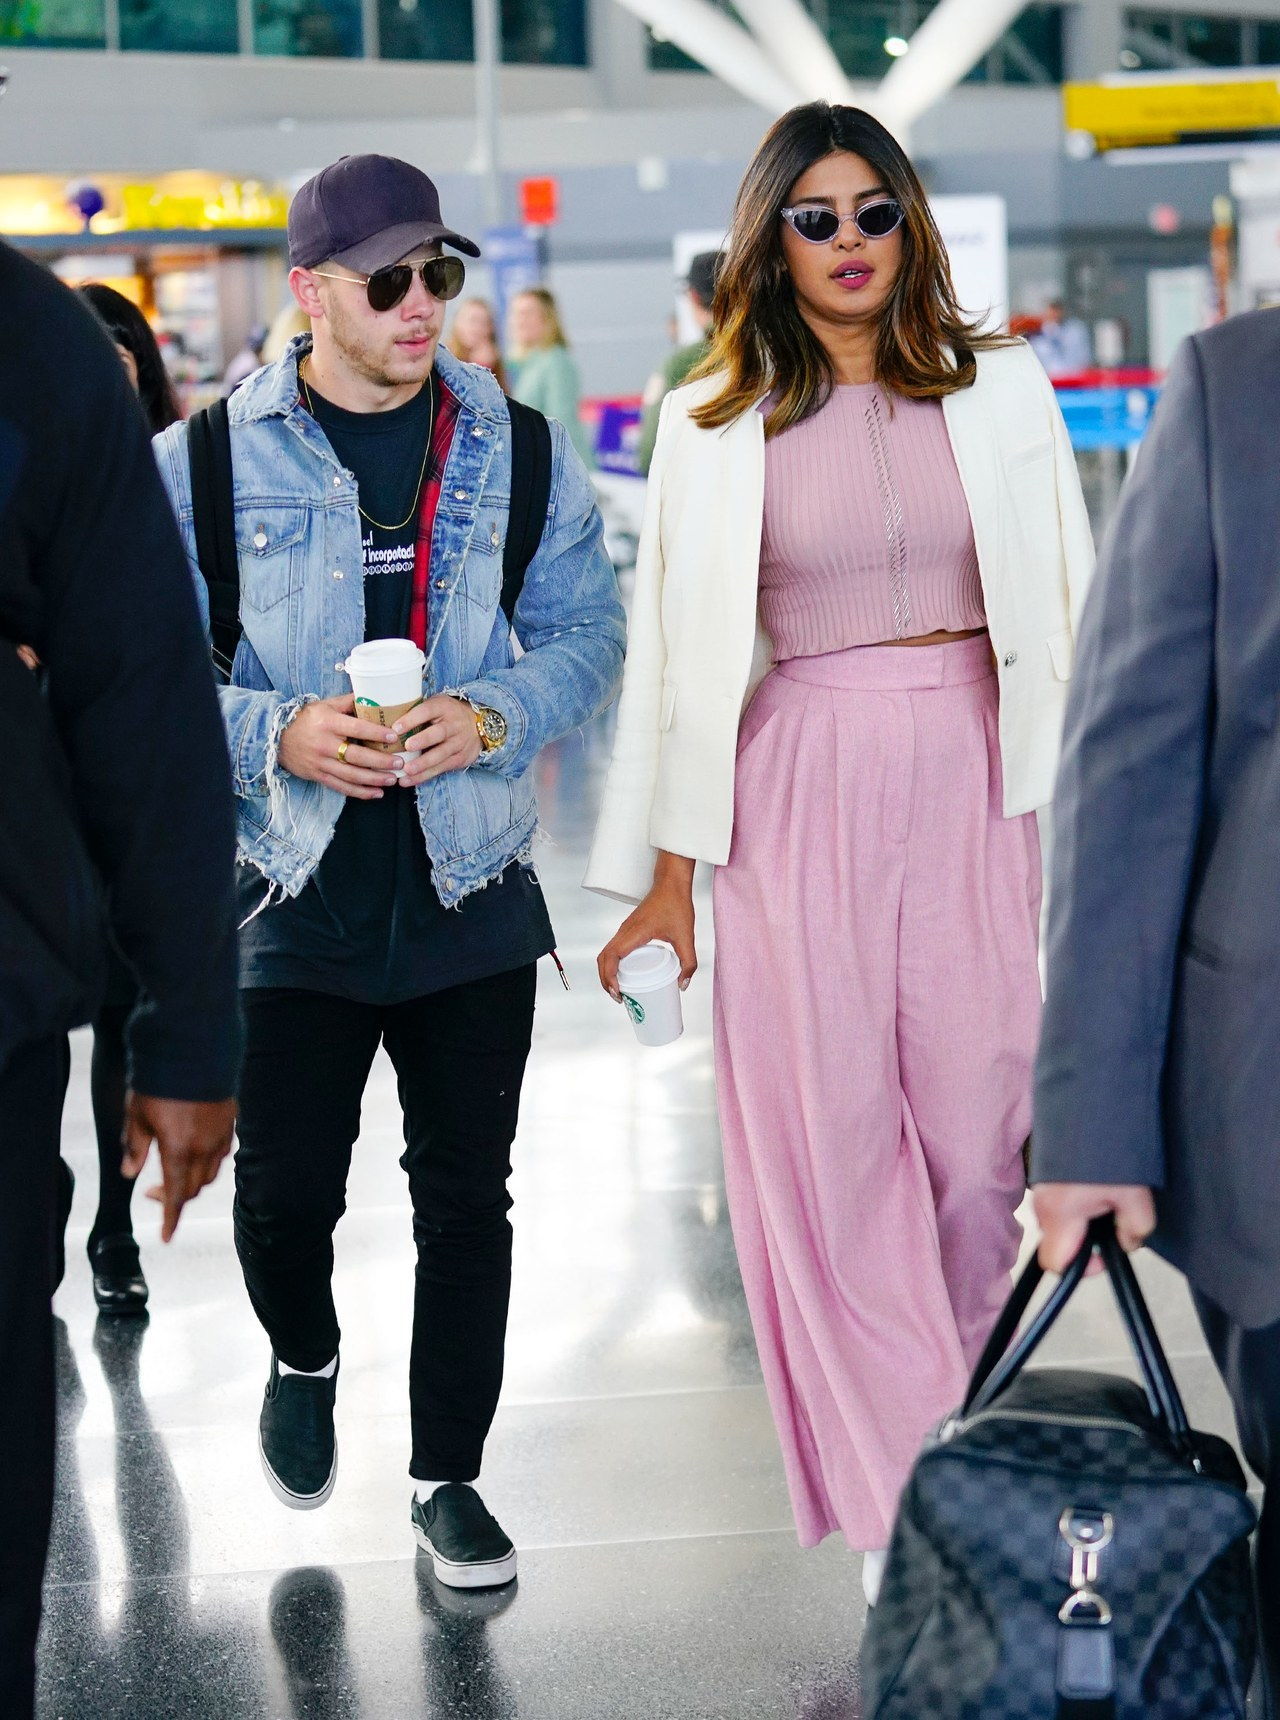 Mella Jonas and Priyanka Chopra arrive at JFK Airport together in New York